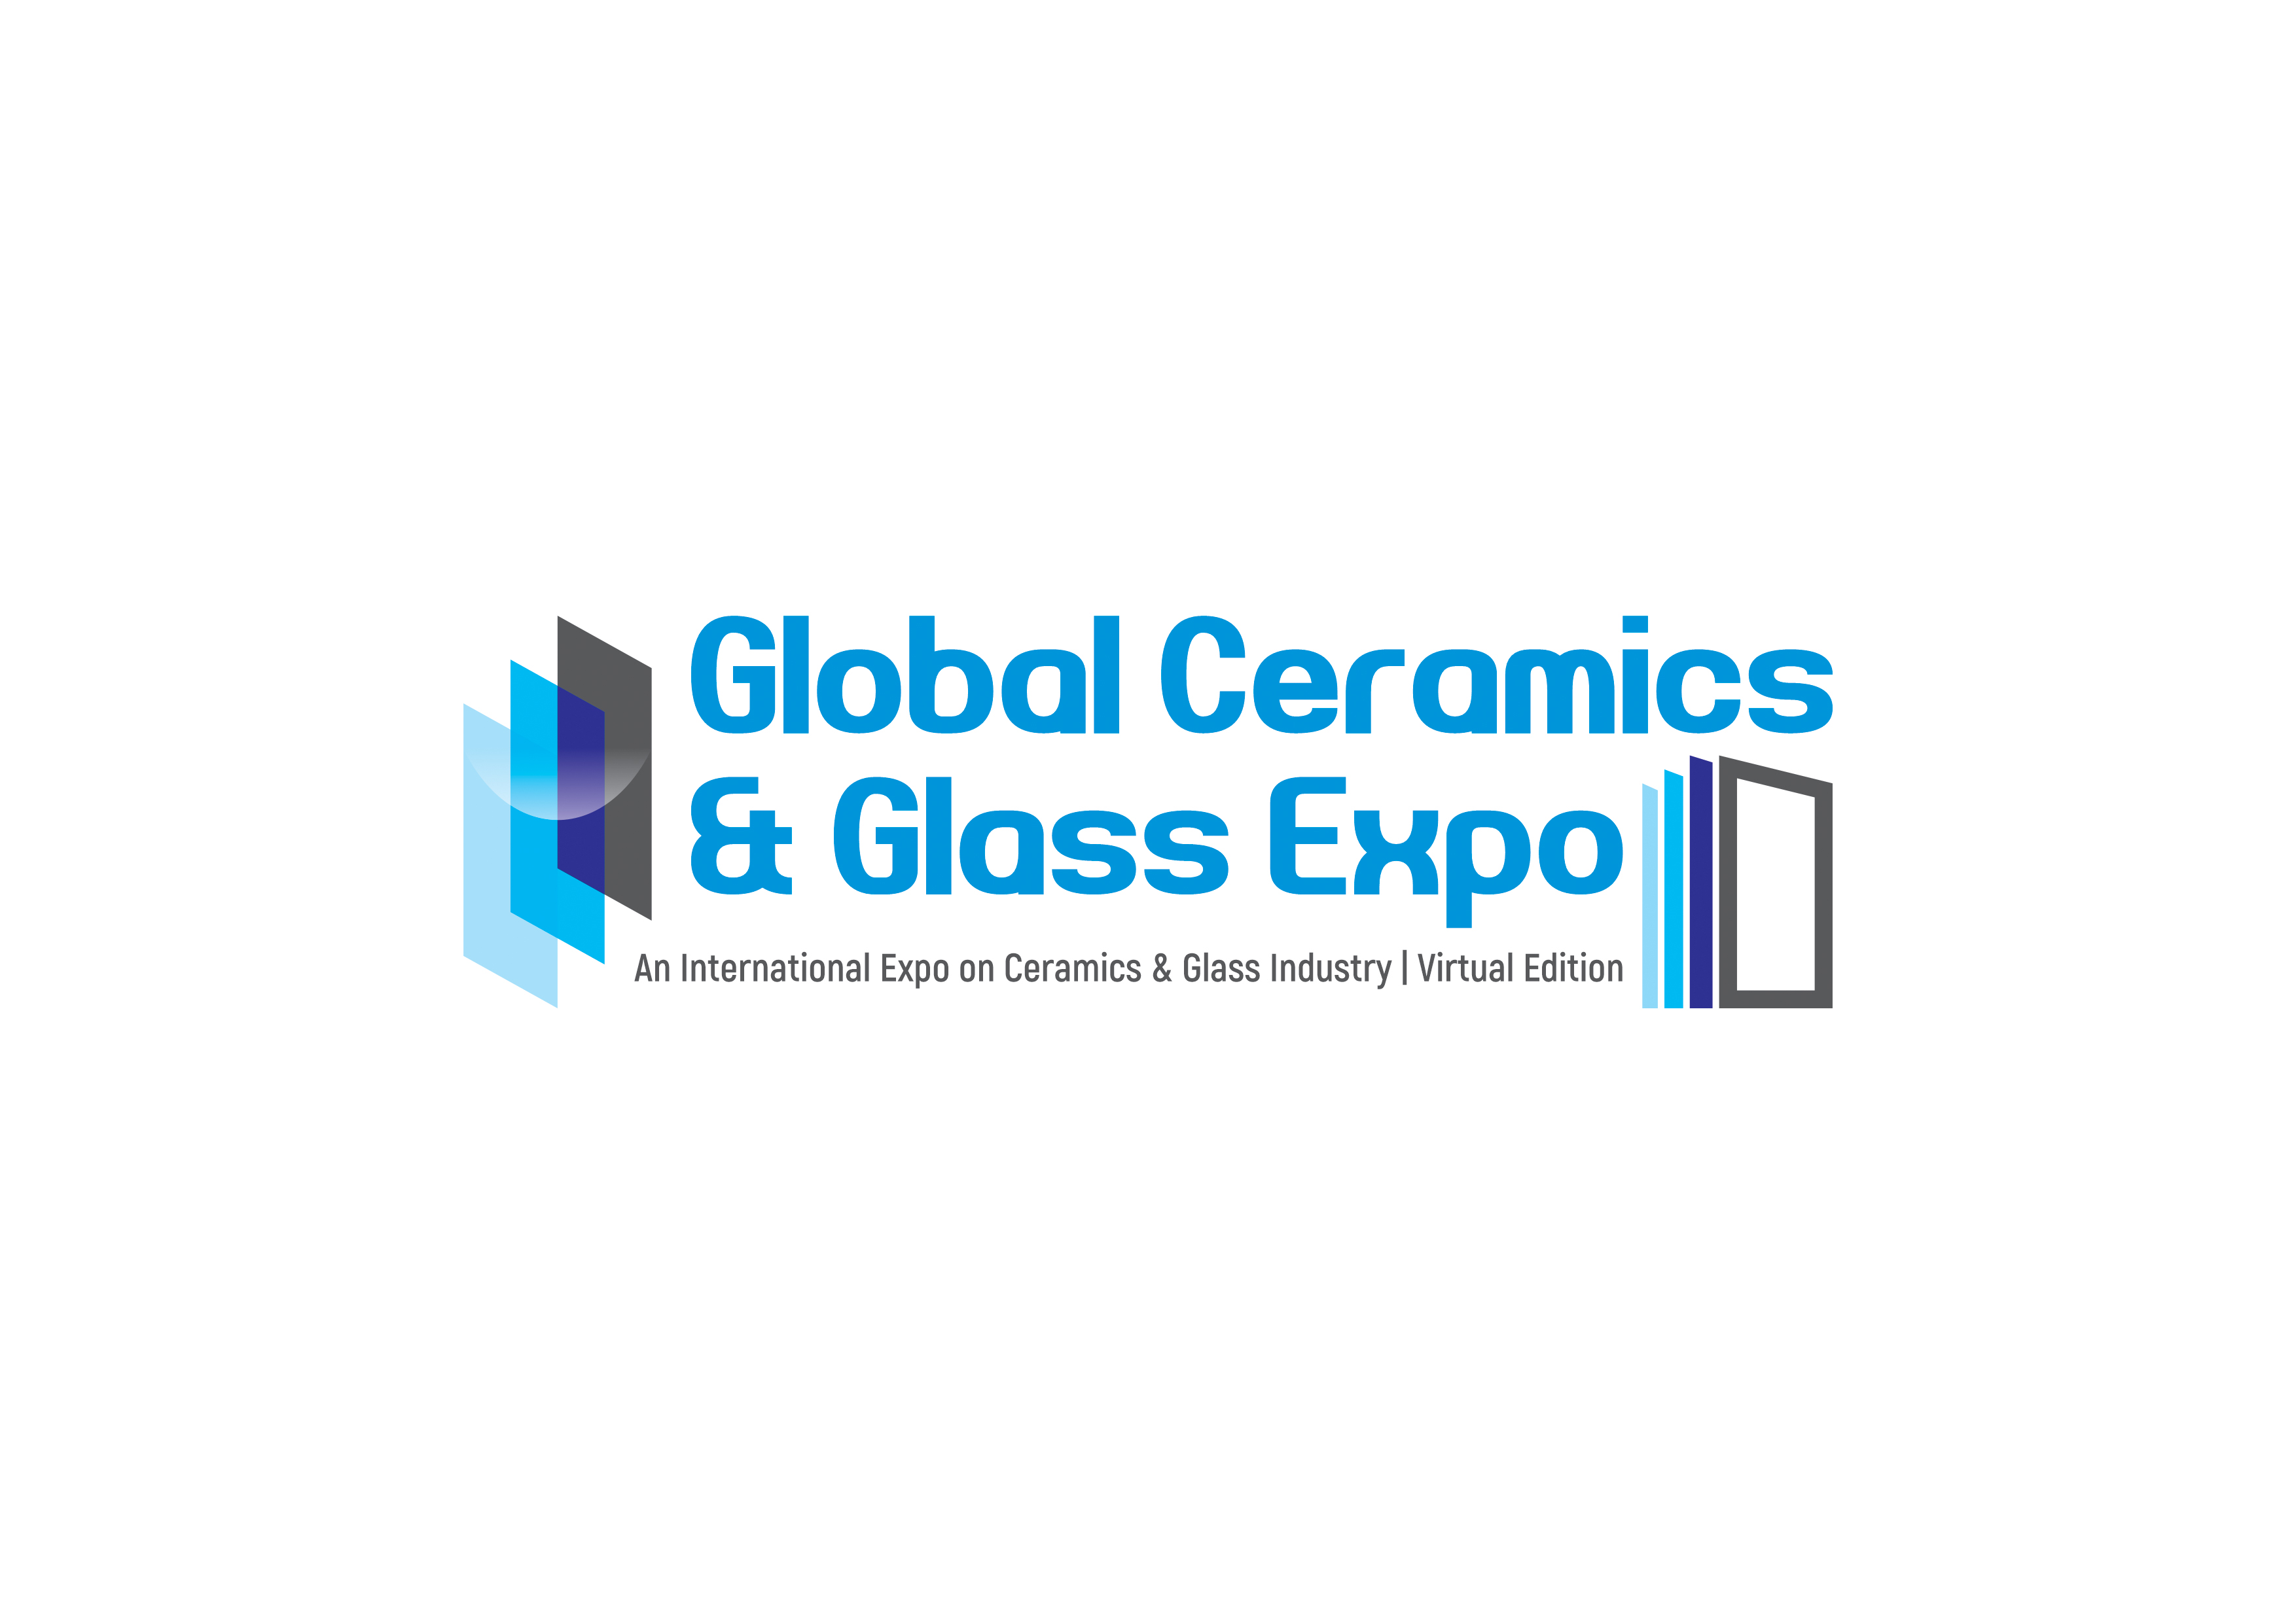 Global Ceramics & Glass Expo